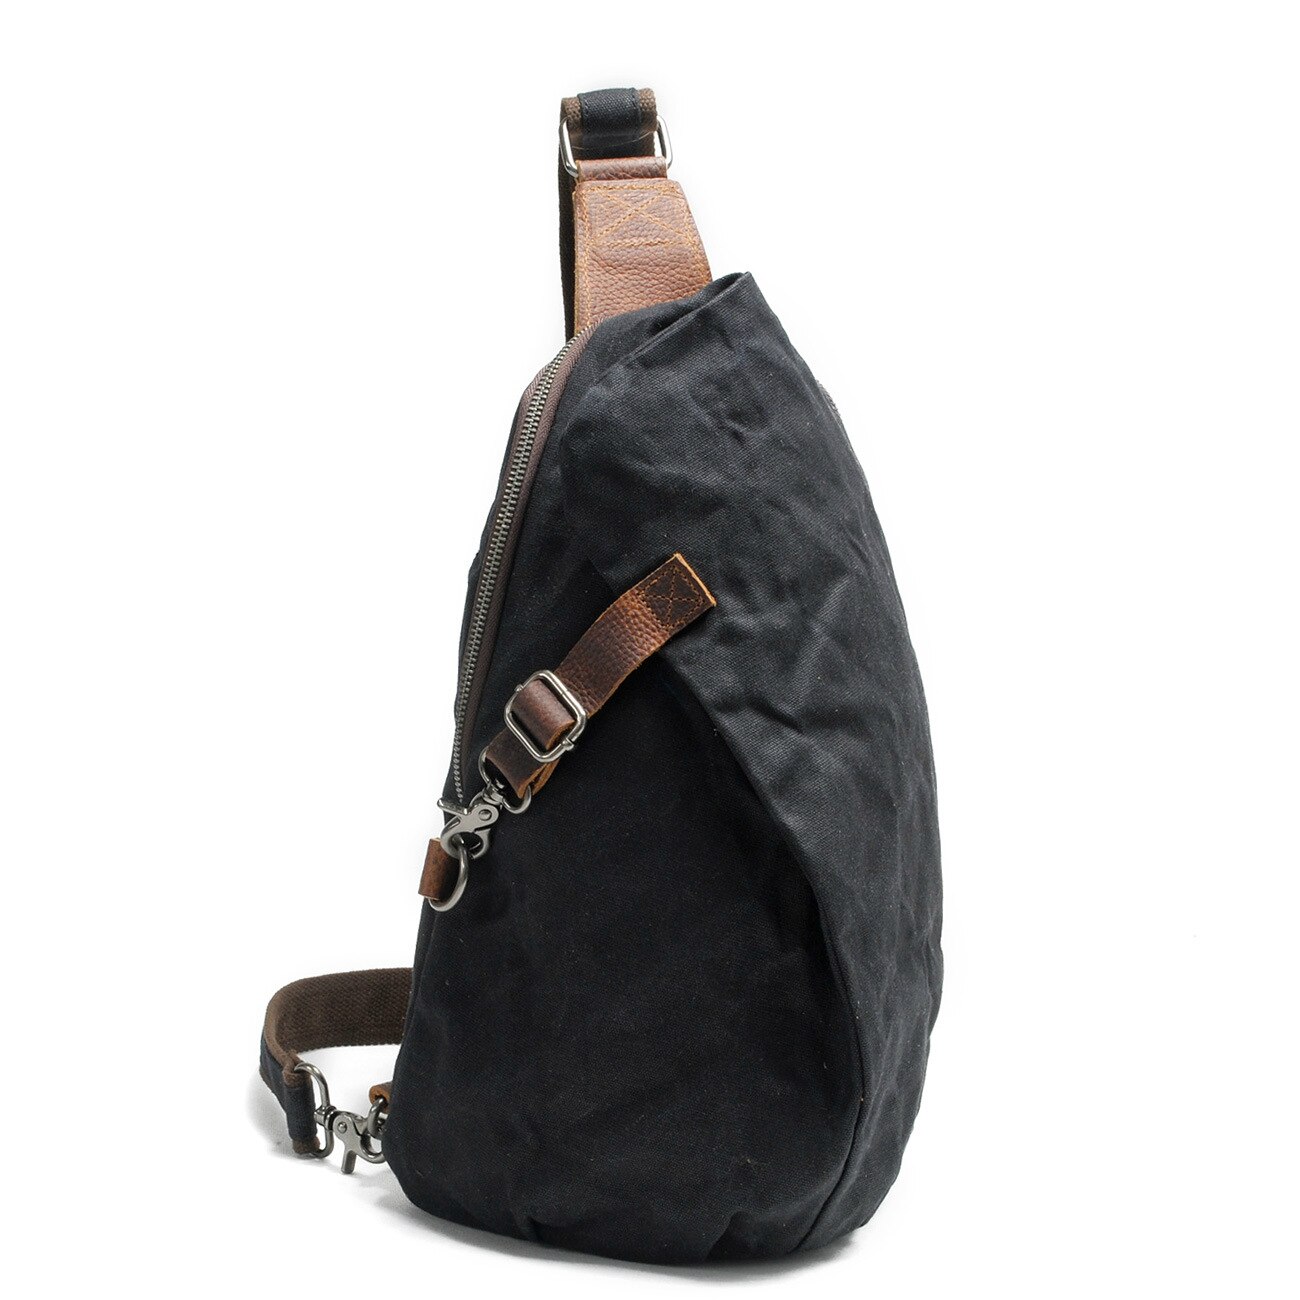 waterproof batik chest bag retro male canvas shoulder diagonal bag casual handbag dumpling bag: Black